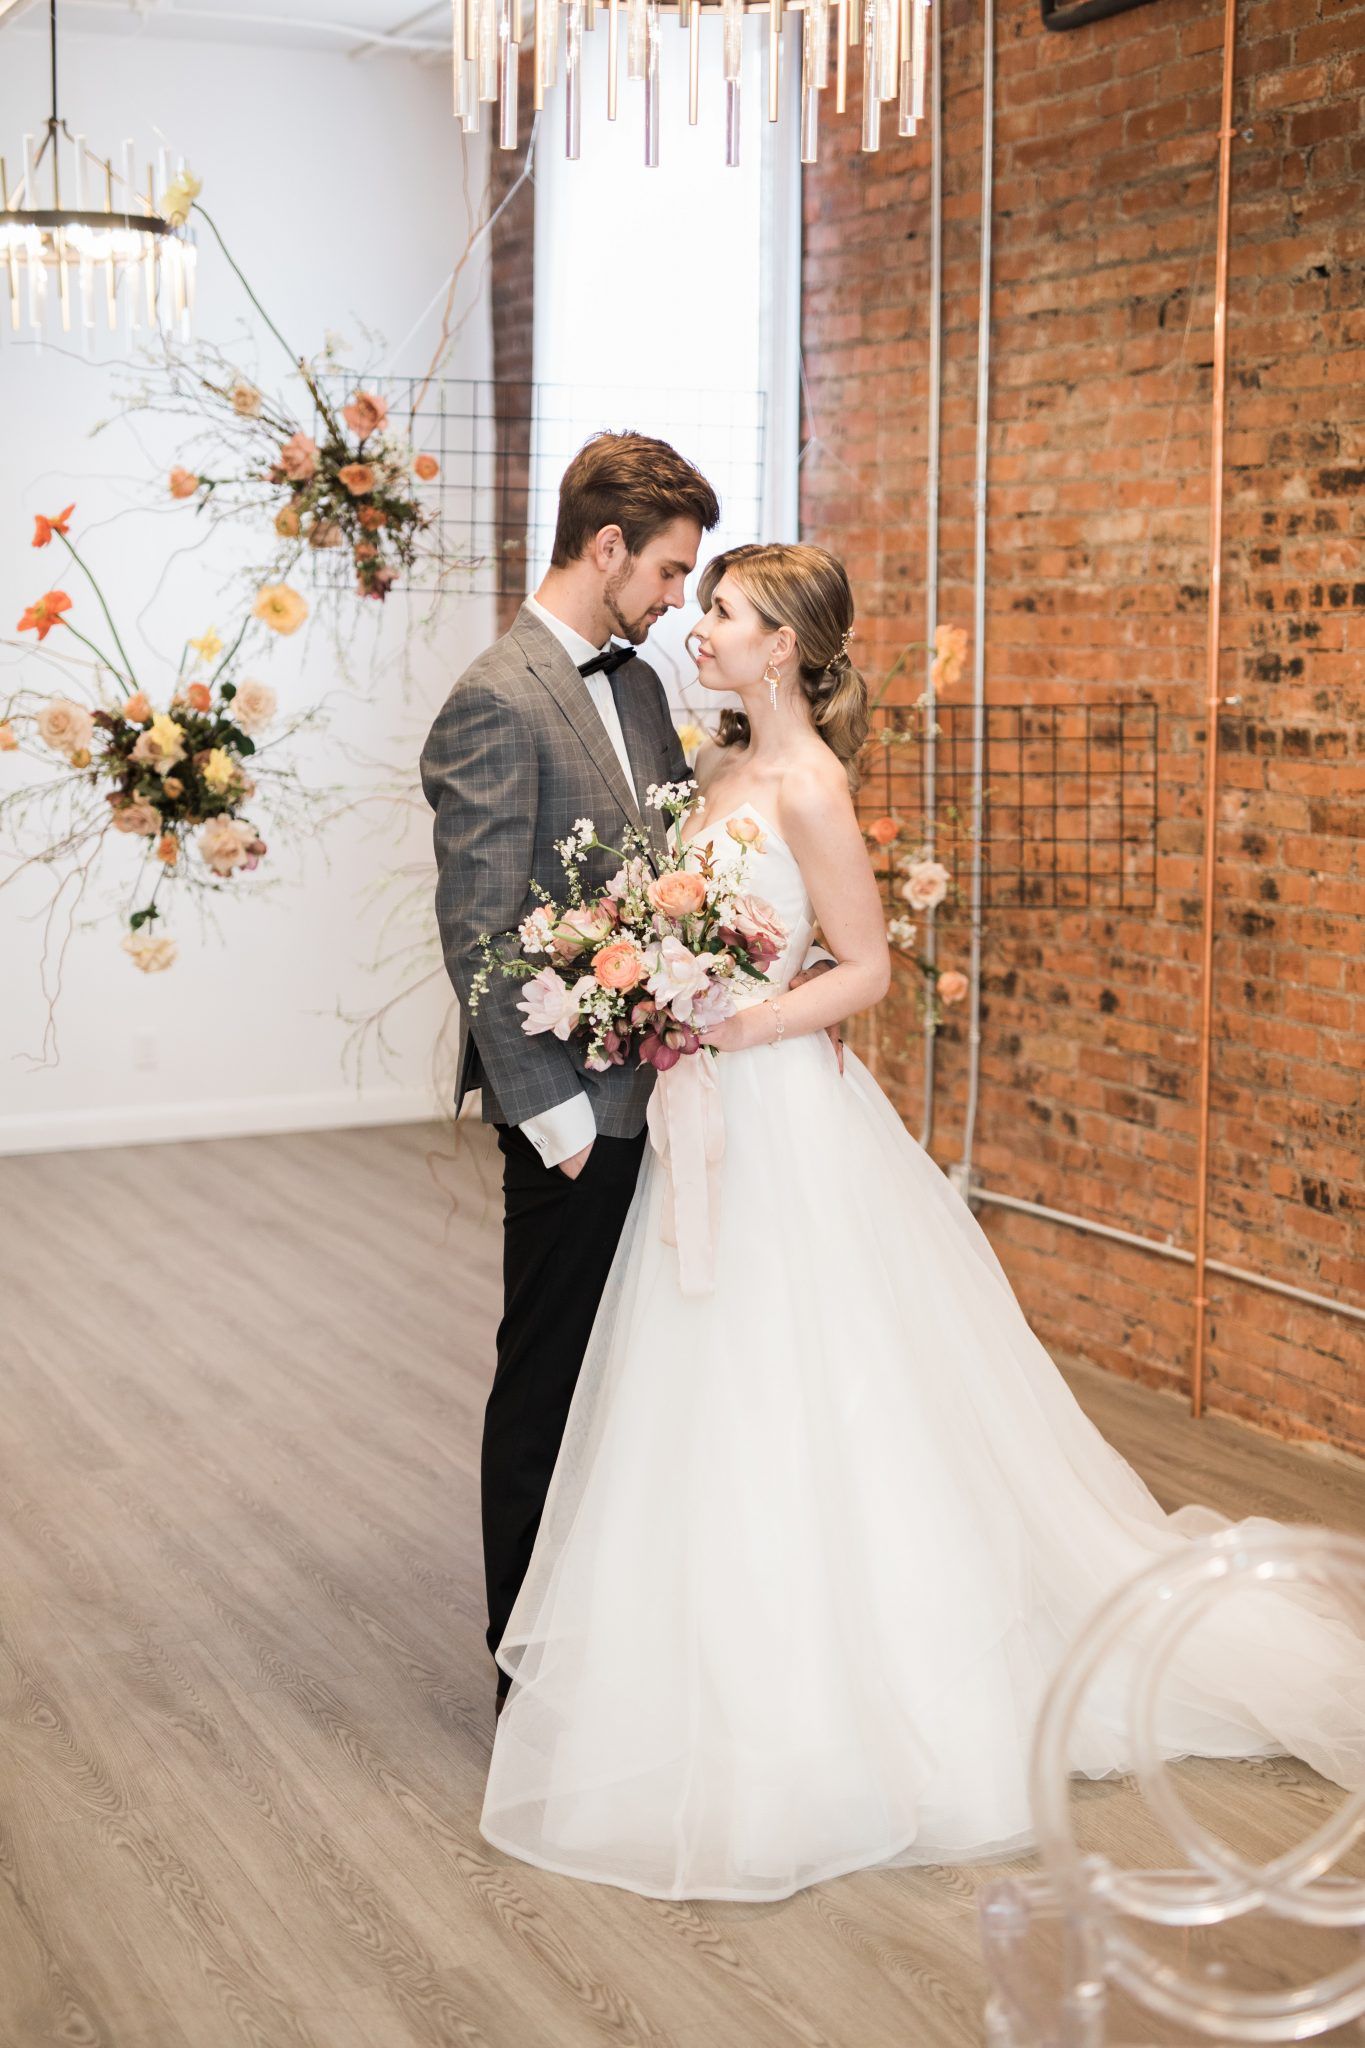 True to Hue: Peach Wedding Inspiration - Calgary wedding venue, bride and groom style, floral installation, ceremony decor